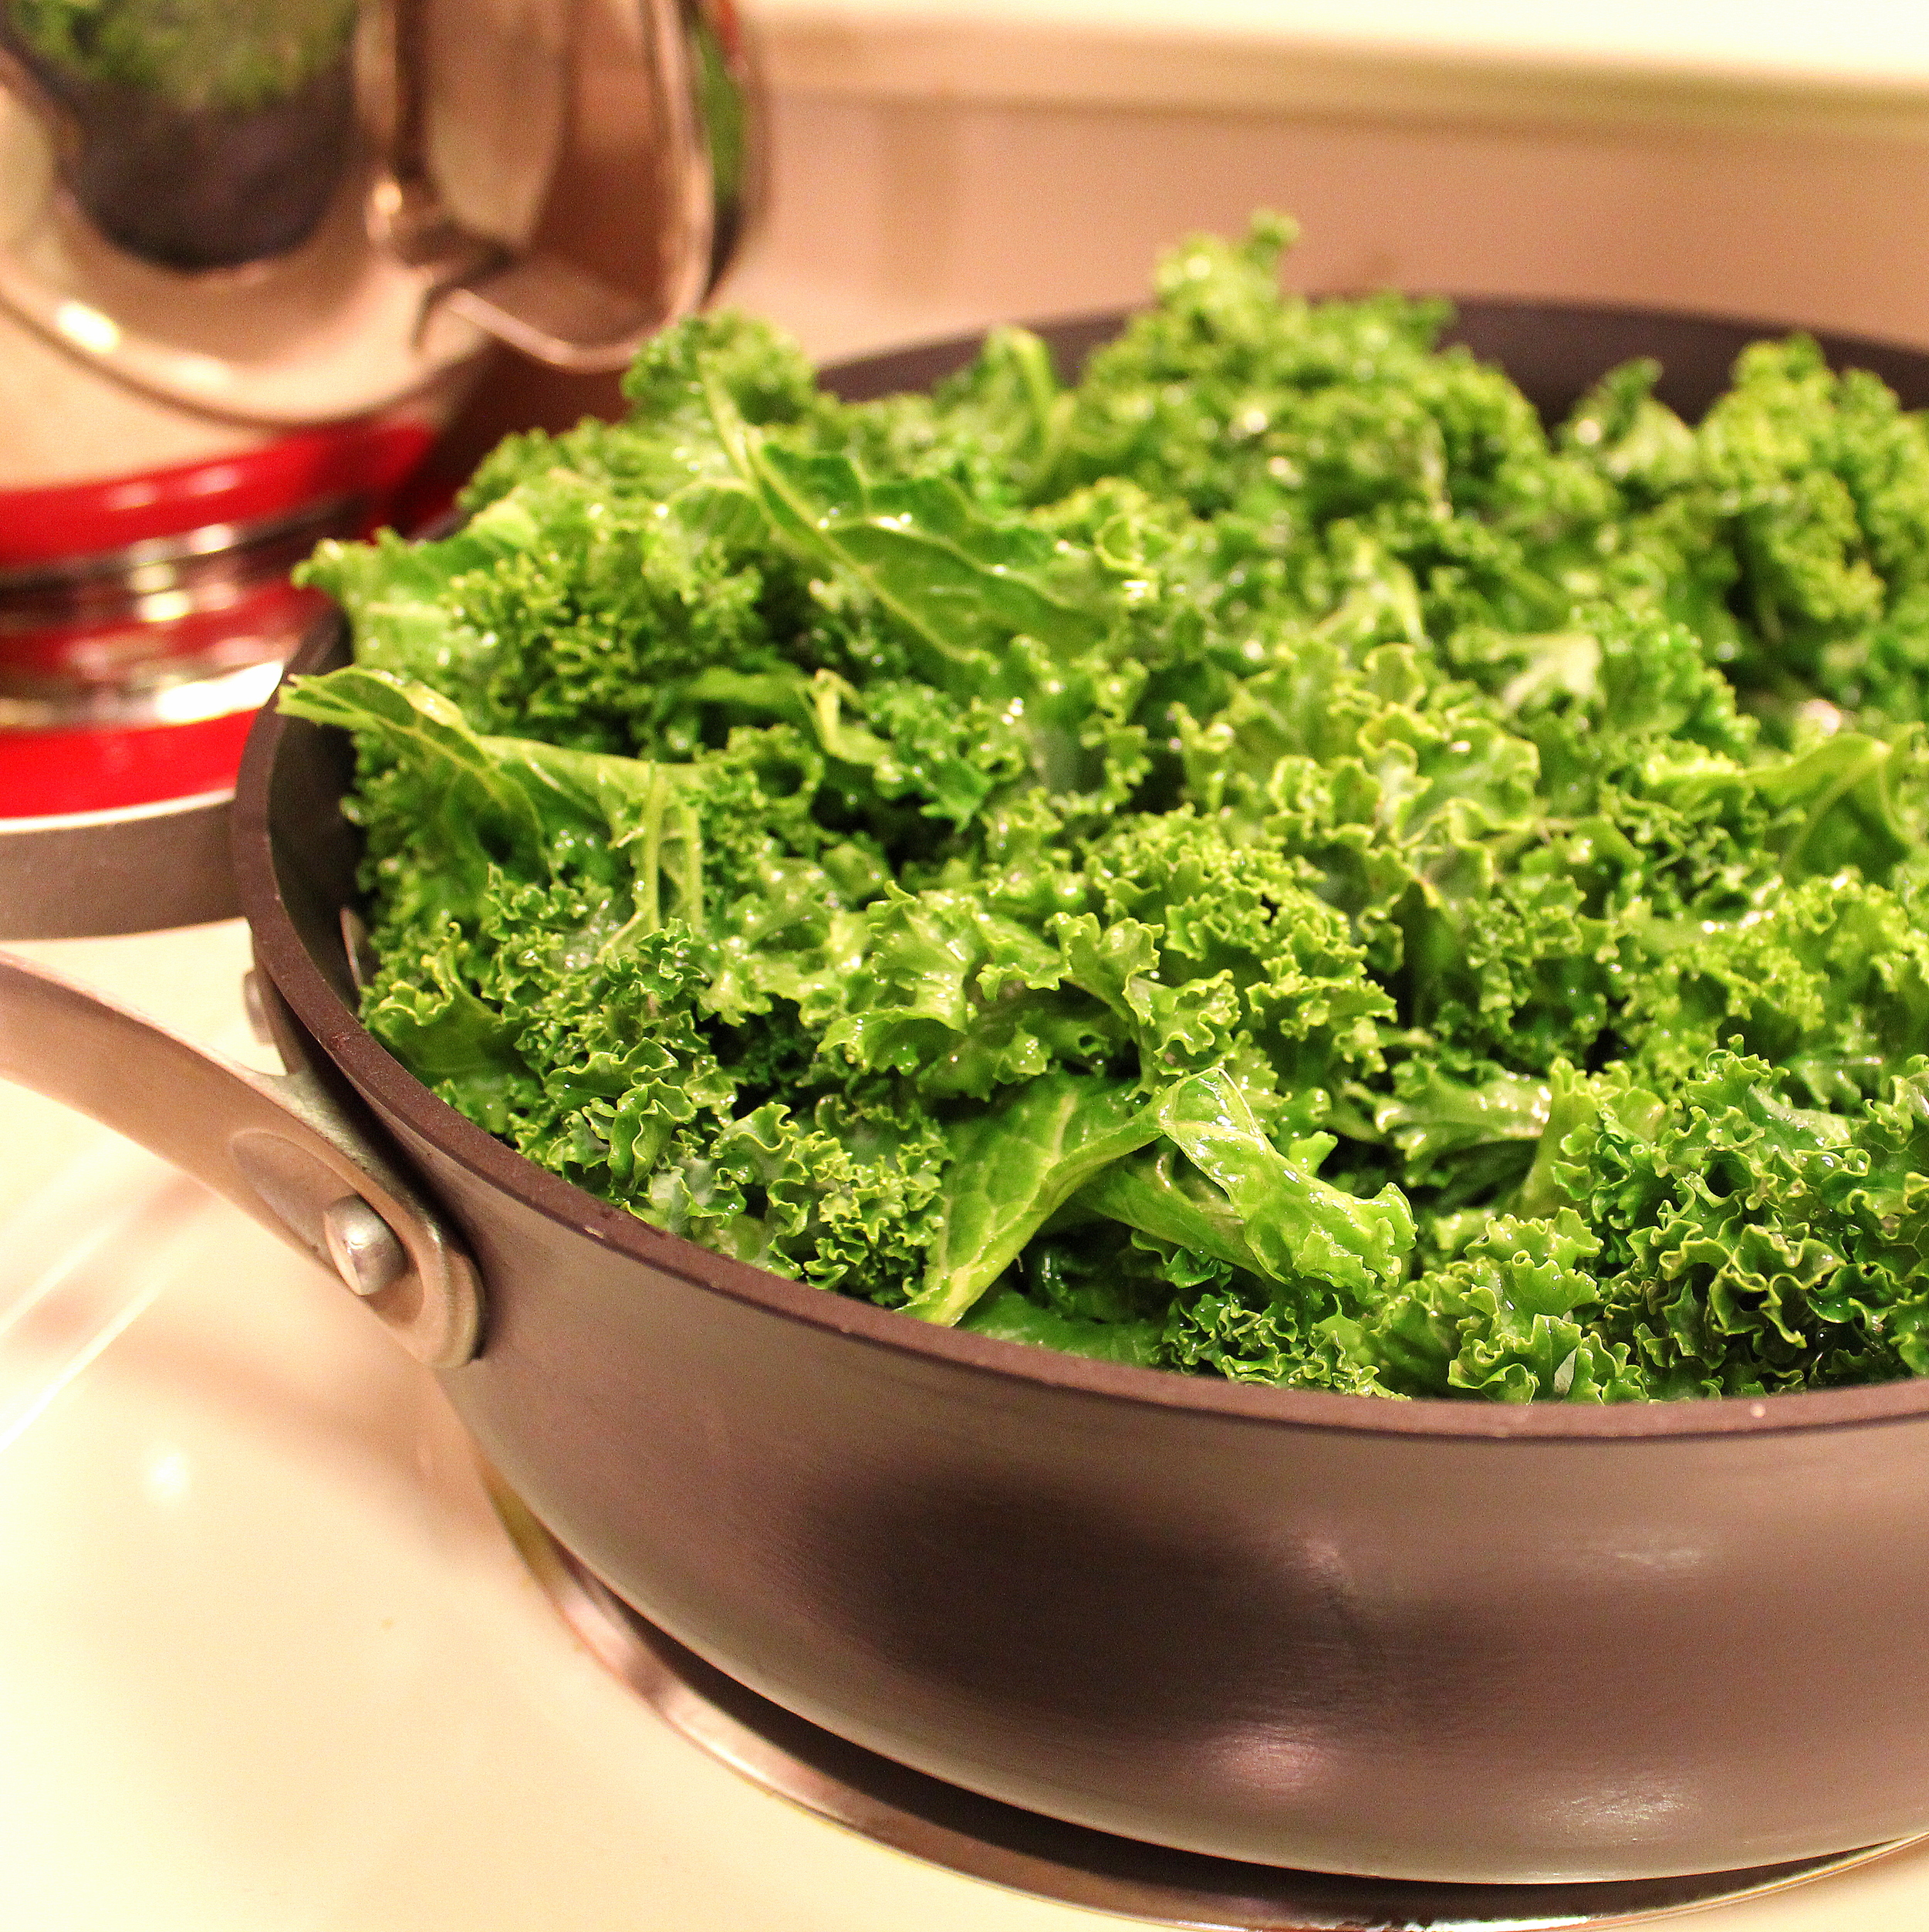 Yum. Go superfood kale!